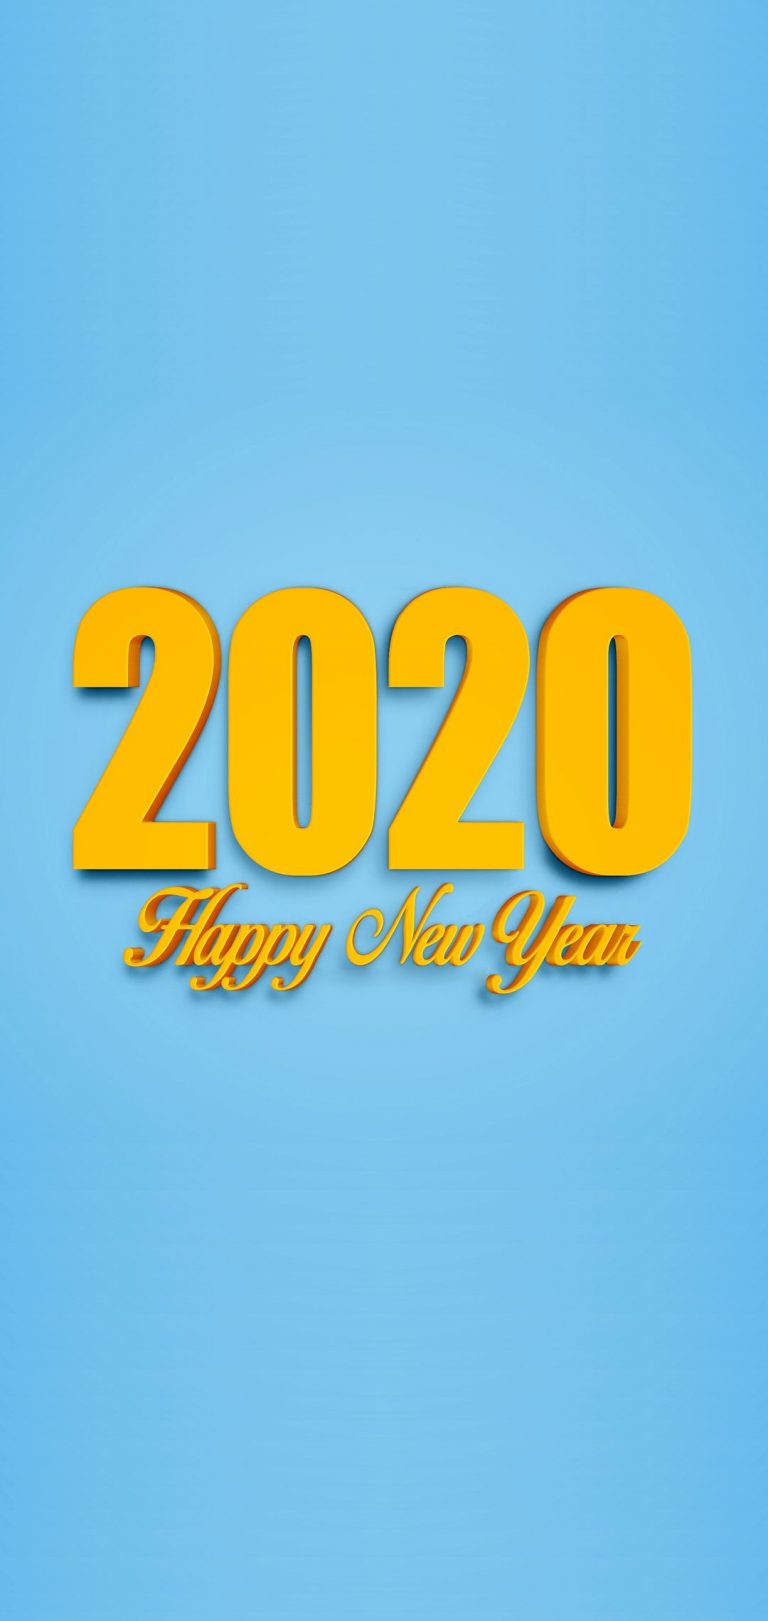 Happy New Year 2020 Phone Wallpaper 11 - [1080x2280]